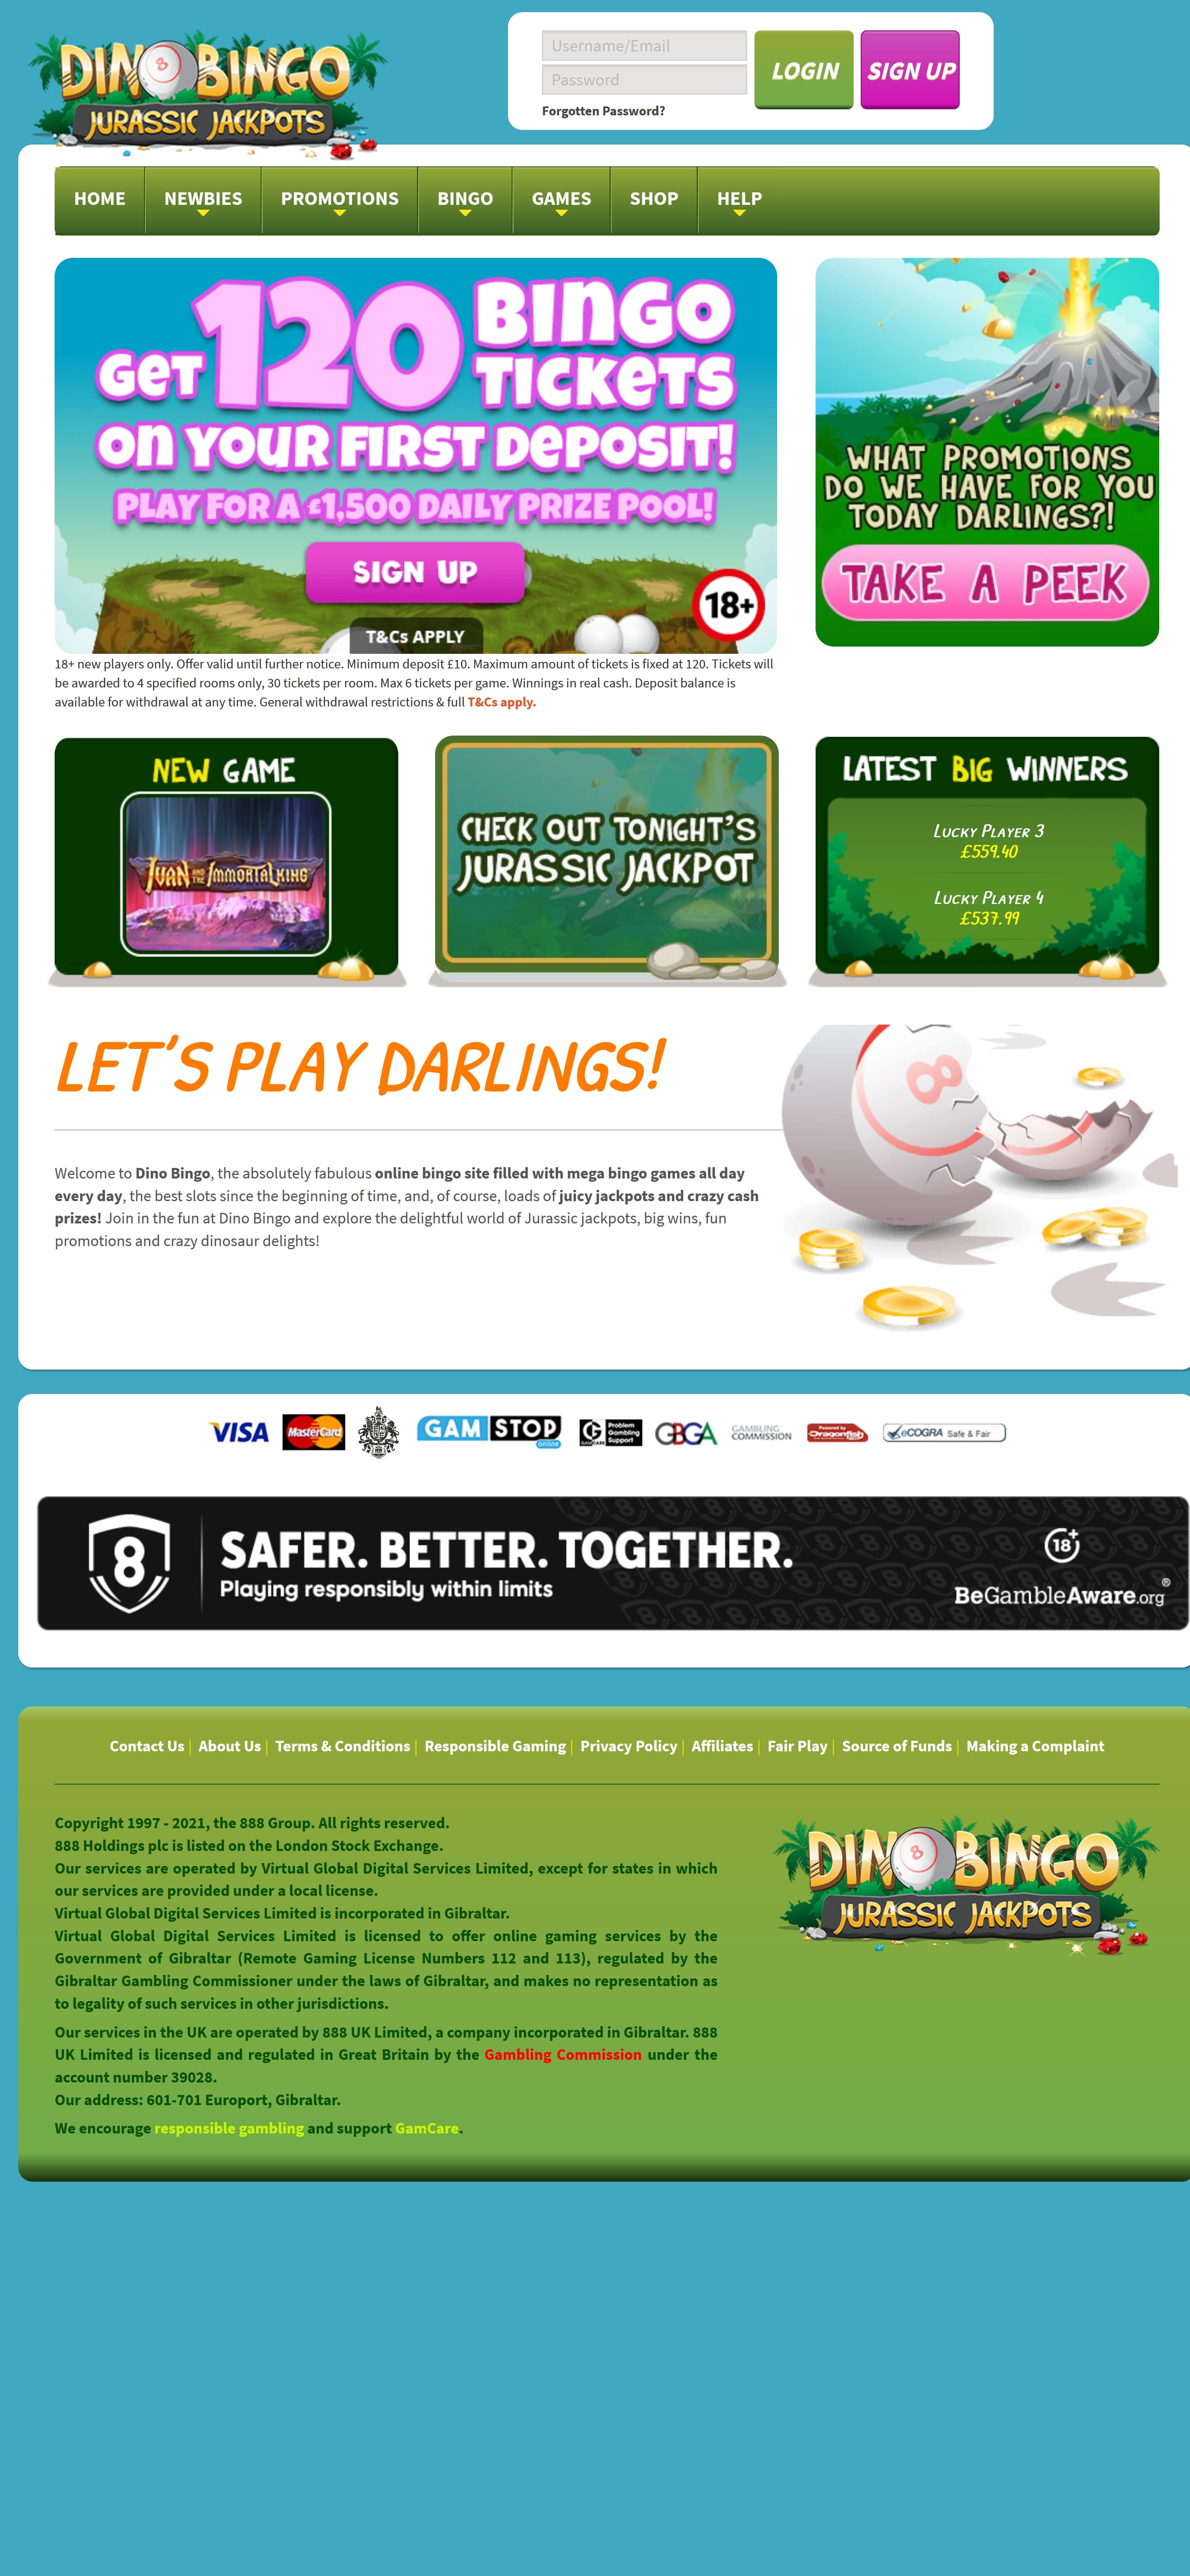 Dino Bingo Casino Mobile Review